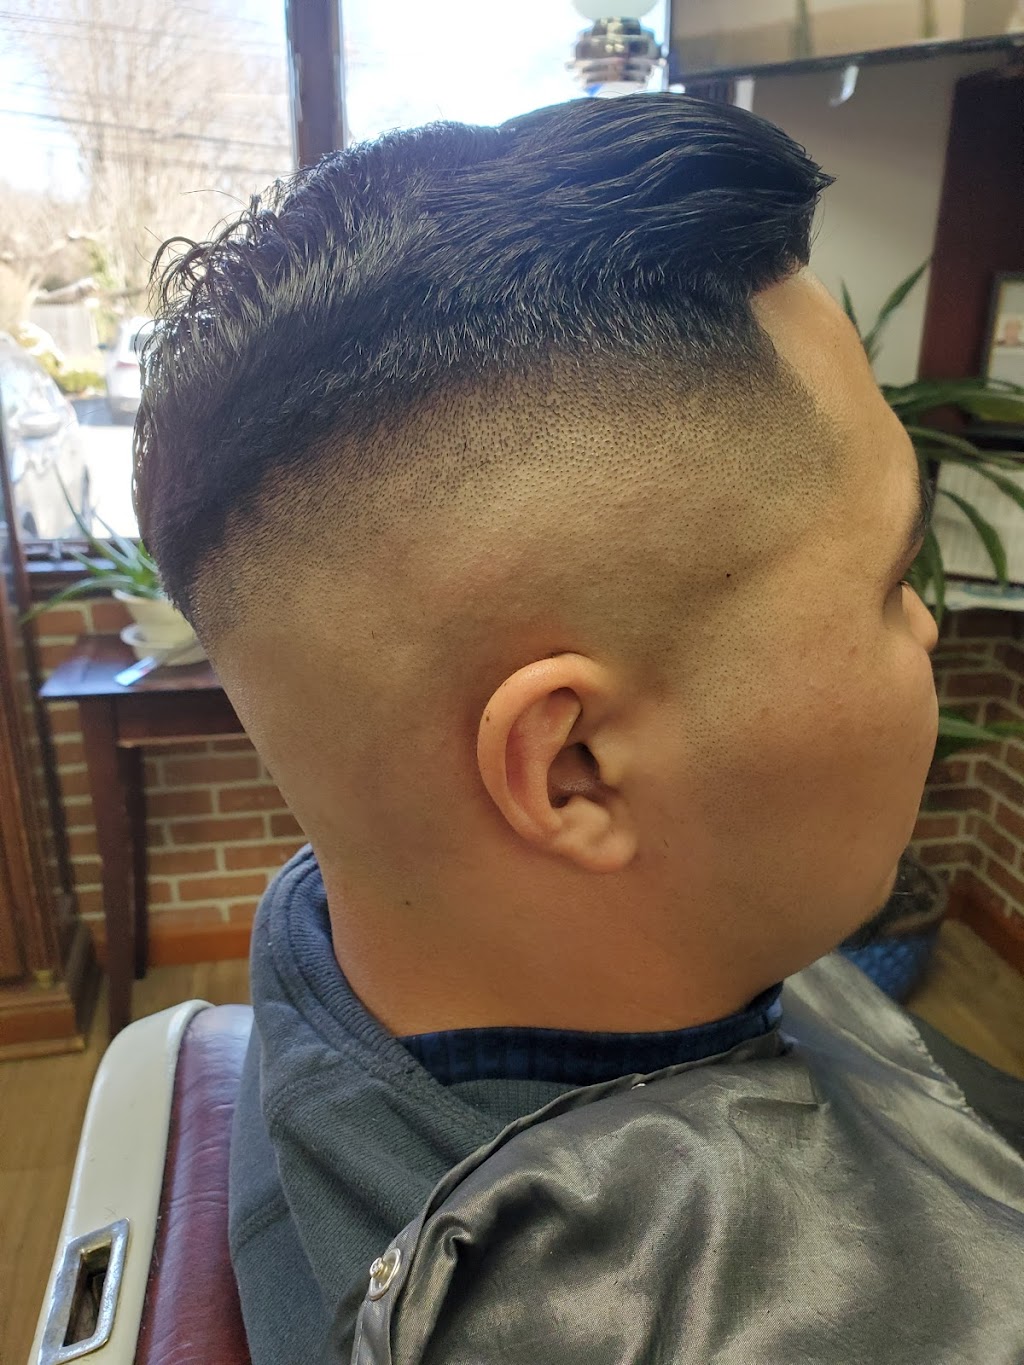 Yuriys barbershop | 466 Glen Cove Ave, Sea Cliff, NY 11579 | Phone: (516) 674-3139